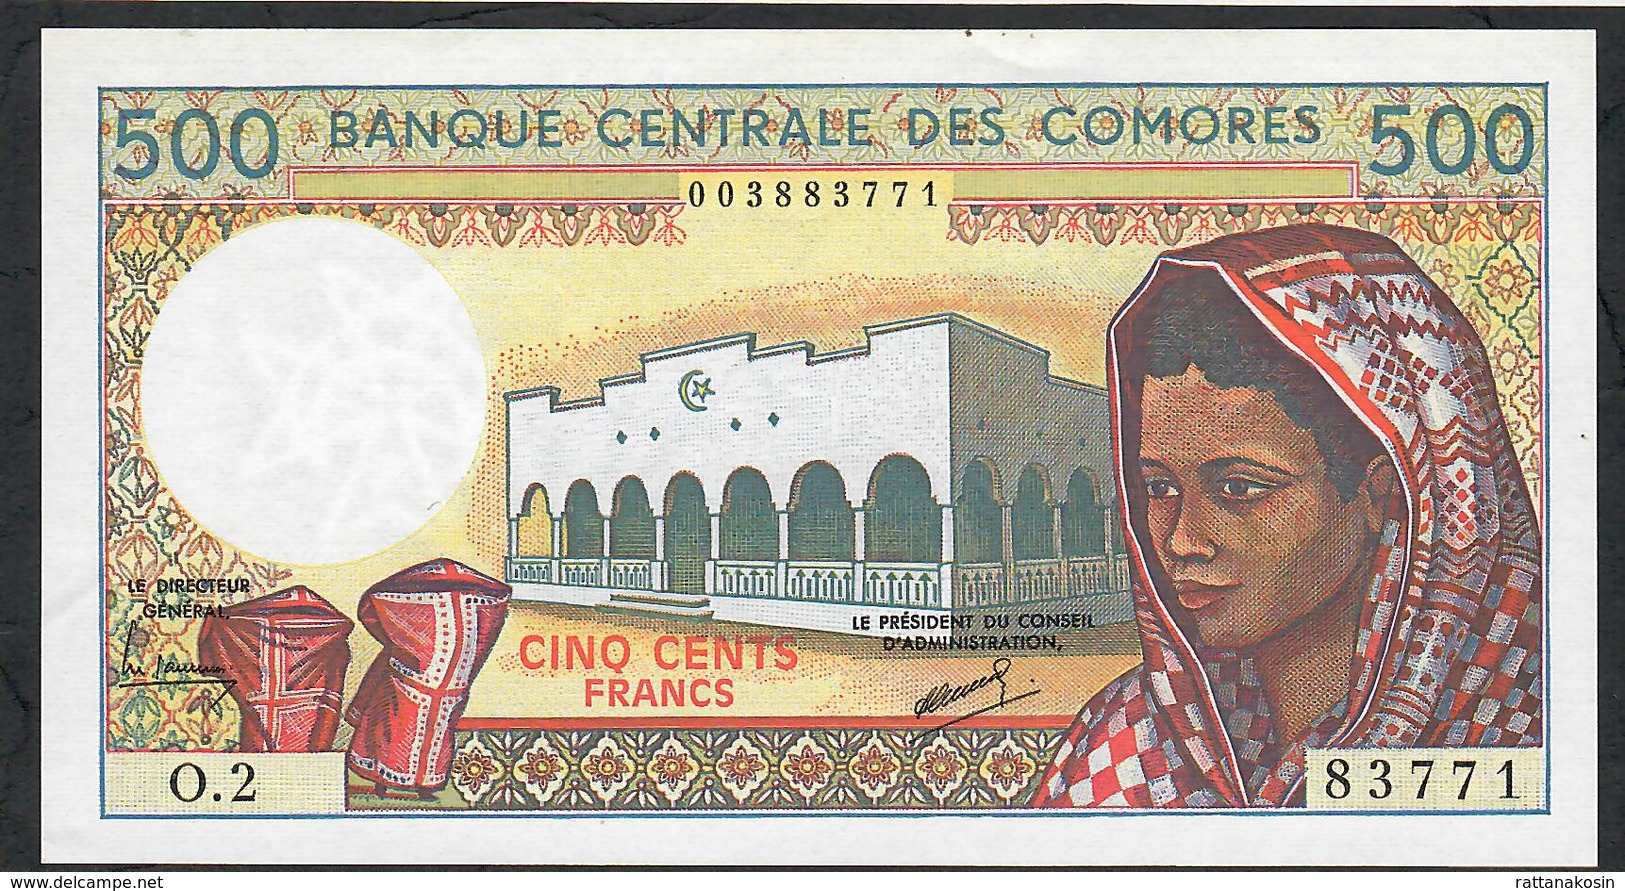 COMORES ERROR P10b INVERTED WATERMARK 500 FRANCS 1986 #O.2 Signature 2   UNC. - Comoros